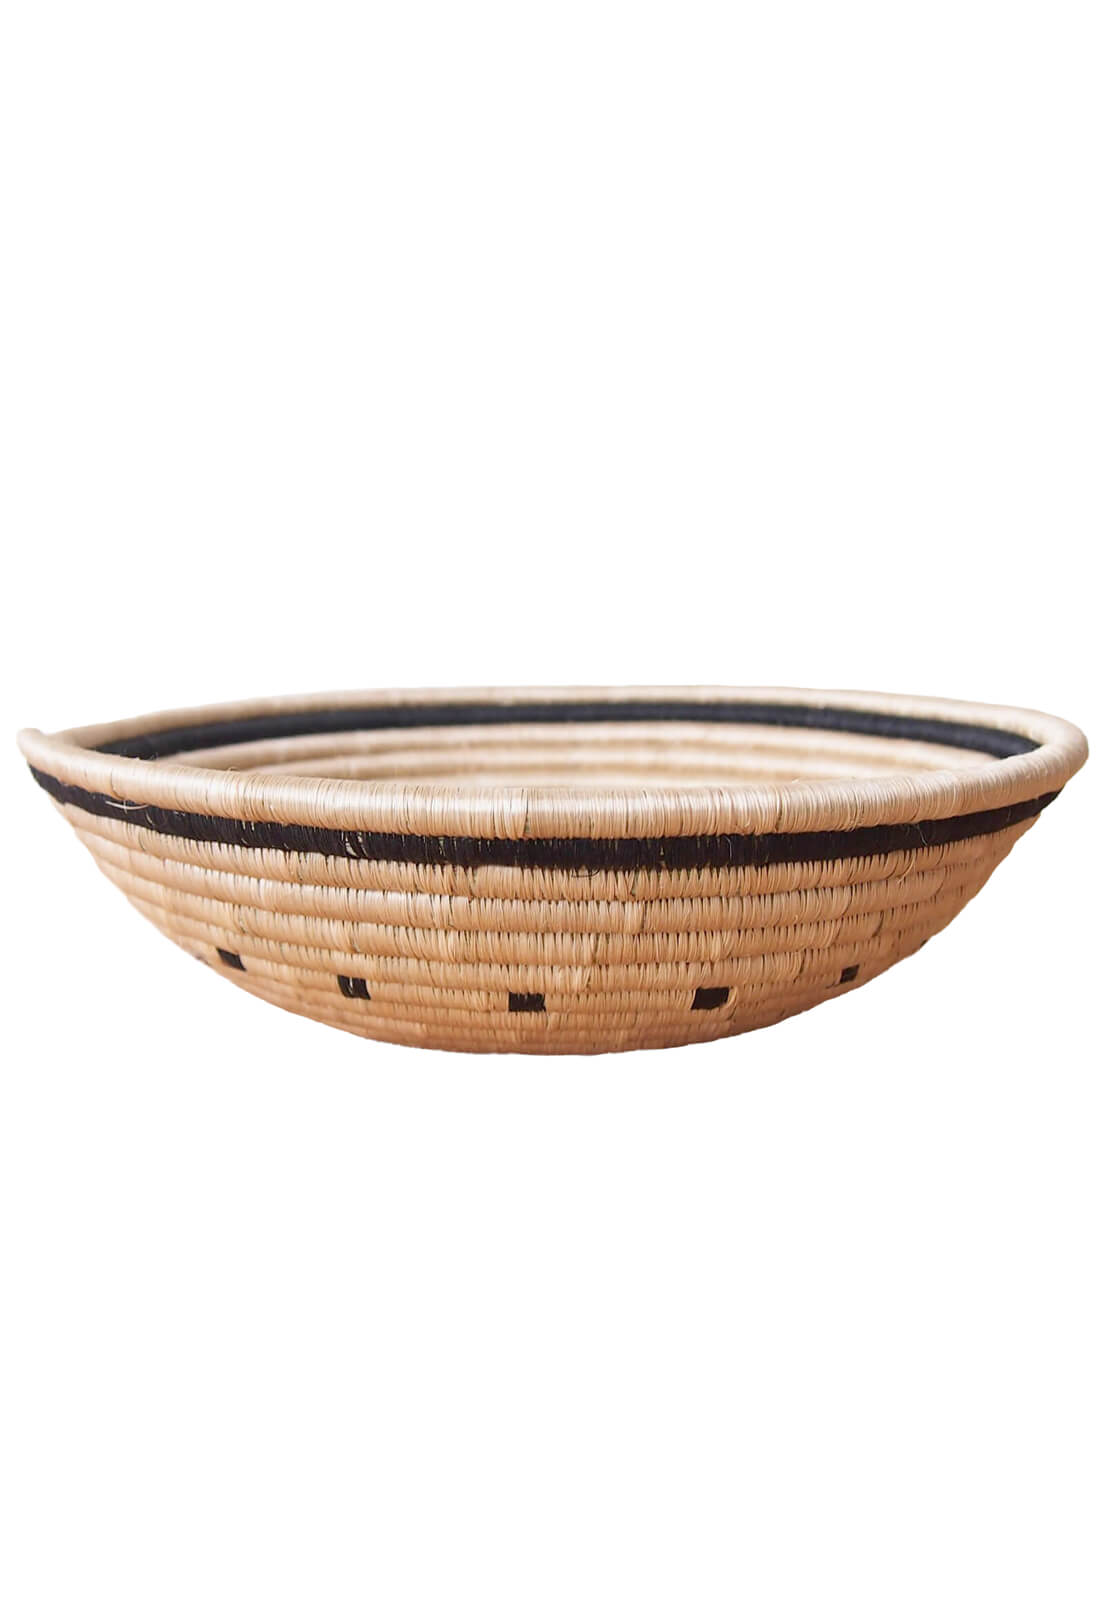 Hand Woven Kaduha Basket - Tan and Black